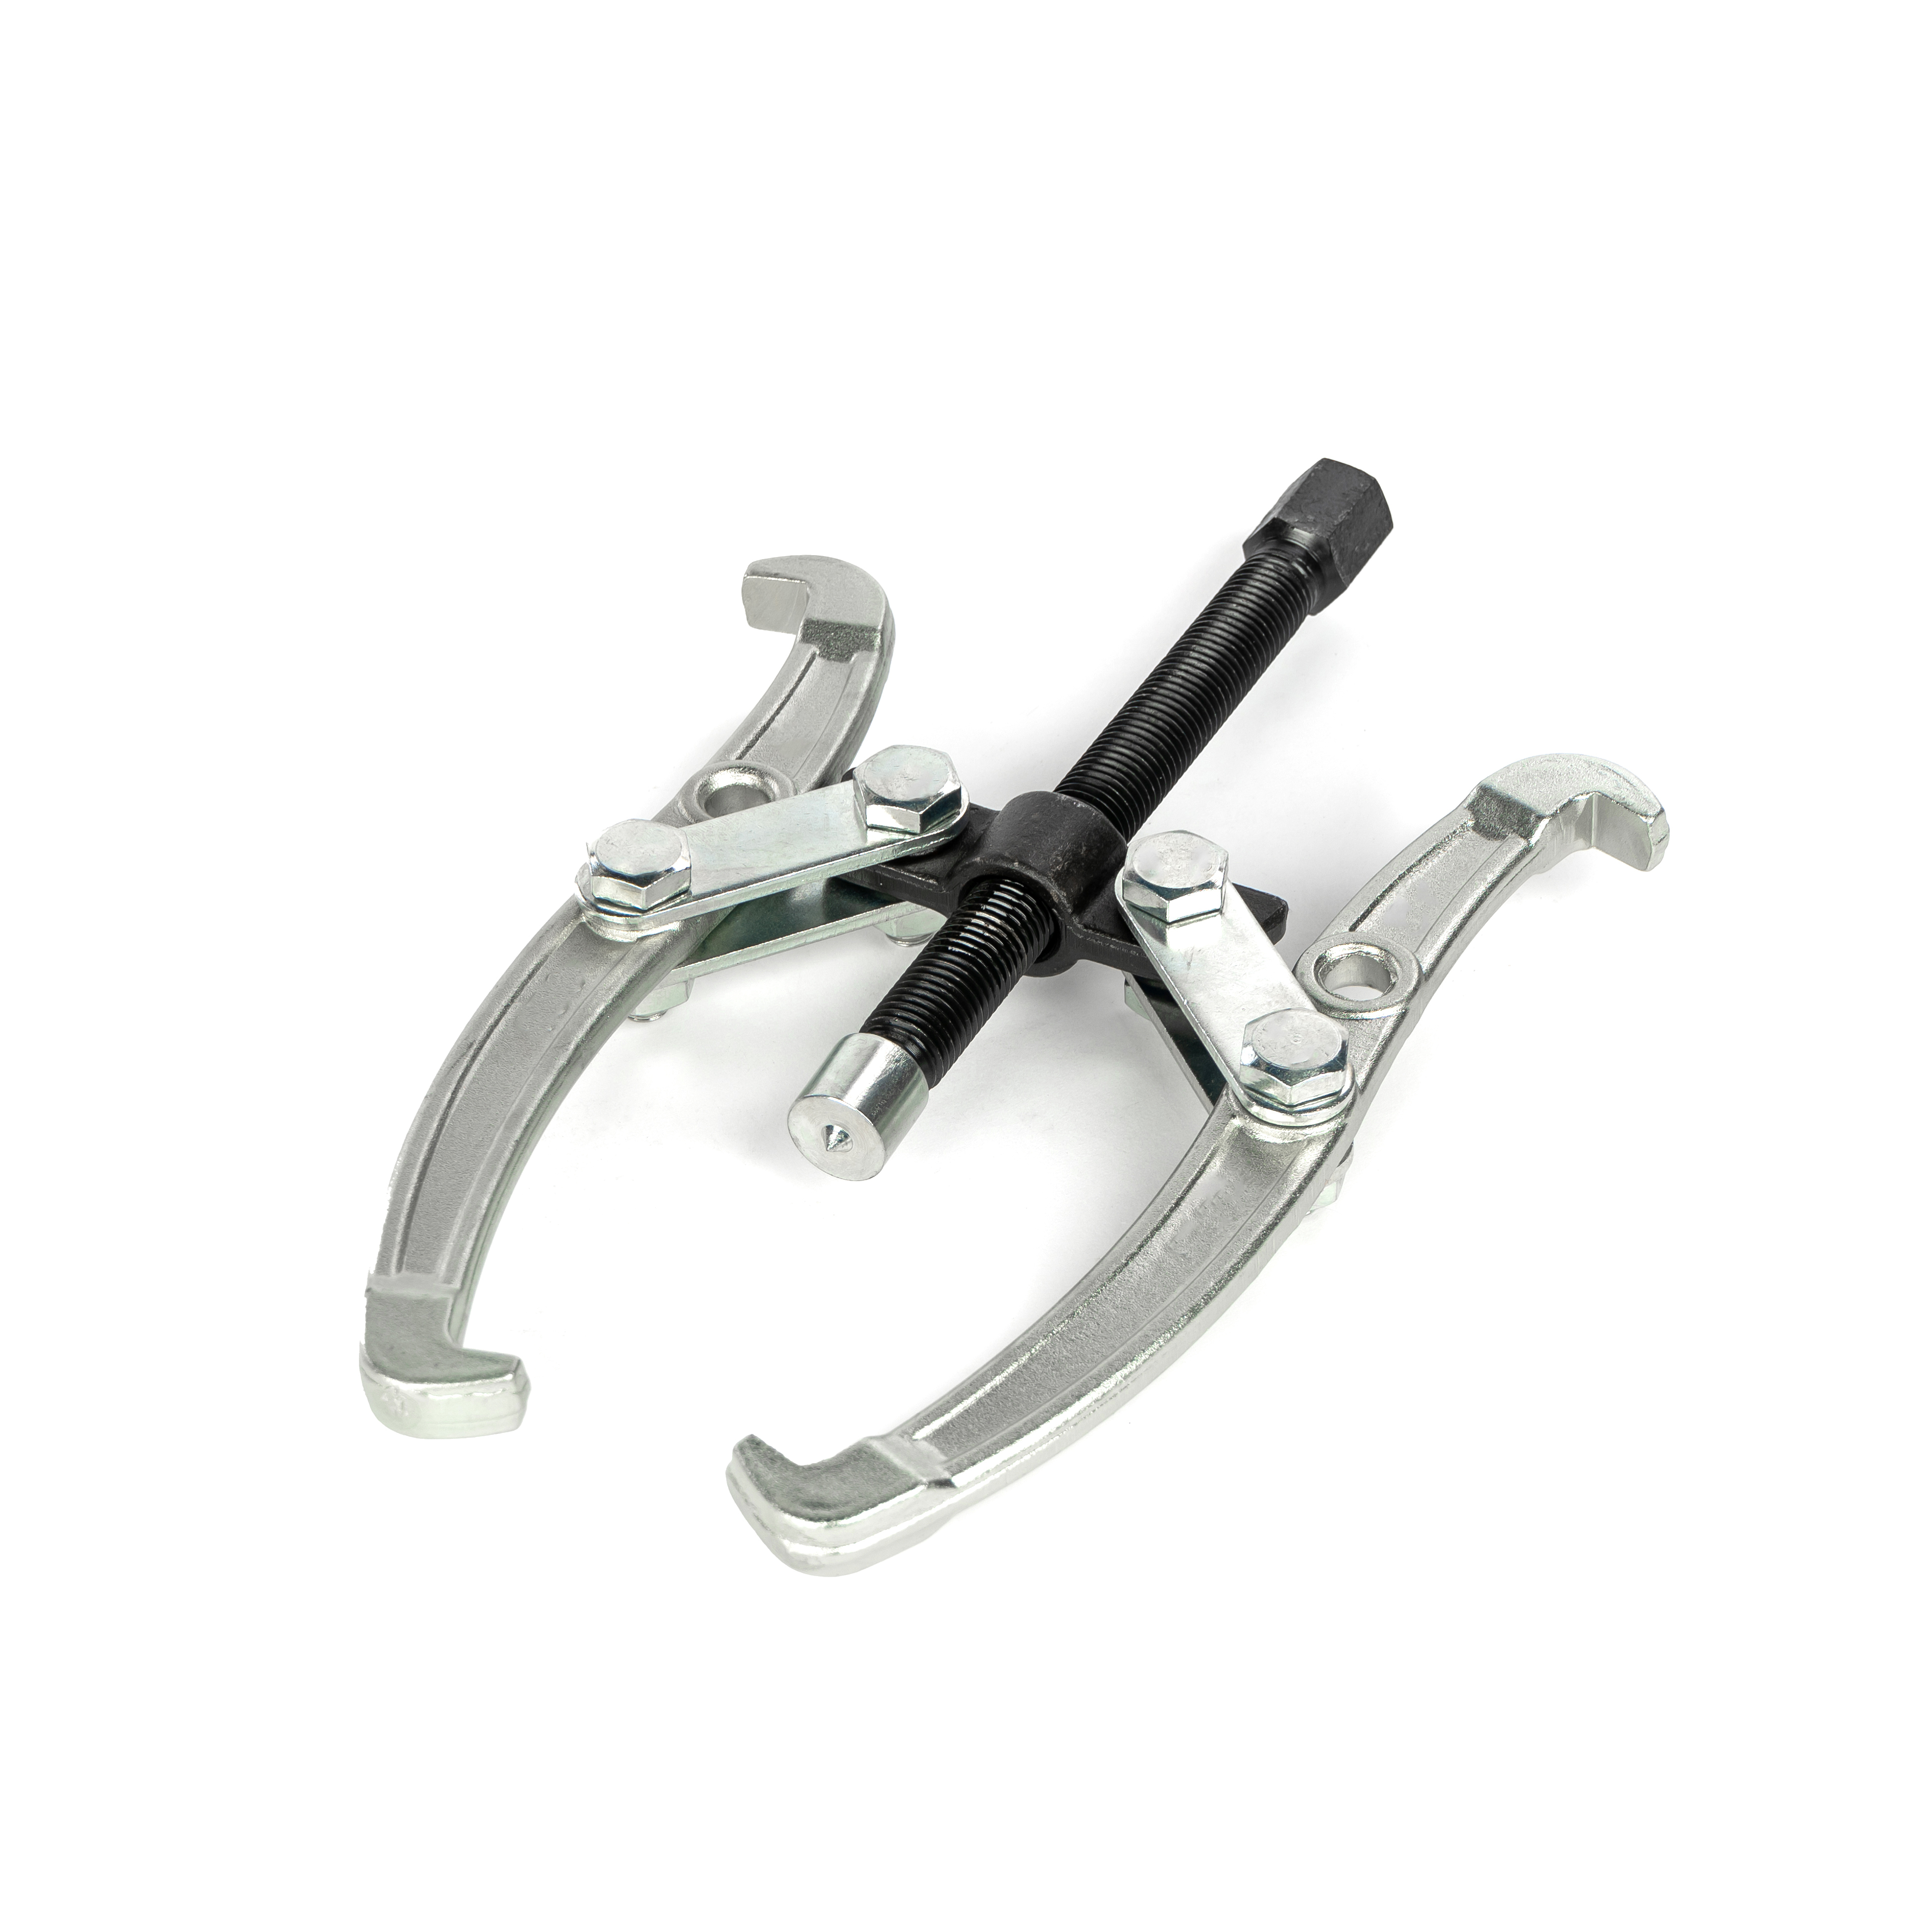 puller tool for removing bearings